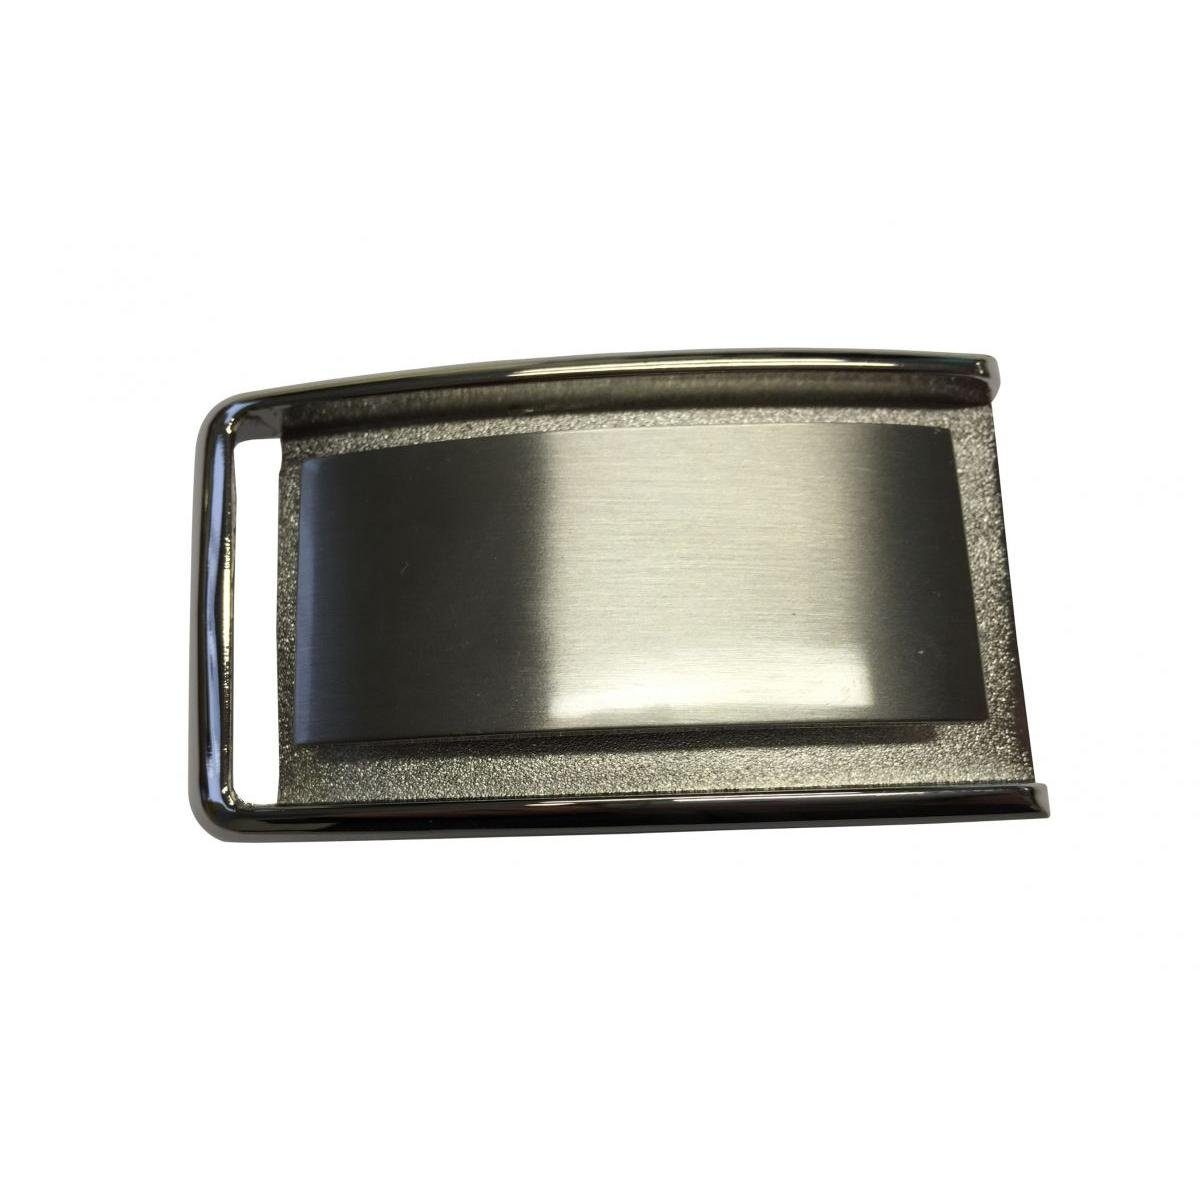 BELTINGER Gürtelschnalle Spezial Platte 3,0 cm - Buckle Wechselschließe Gürtelschließe 30mm - F